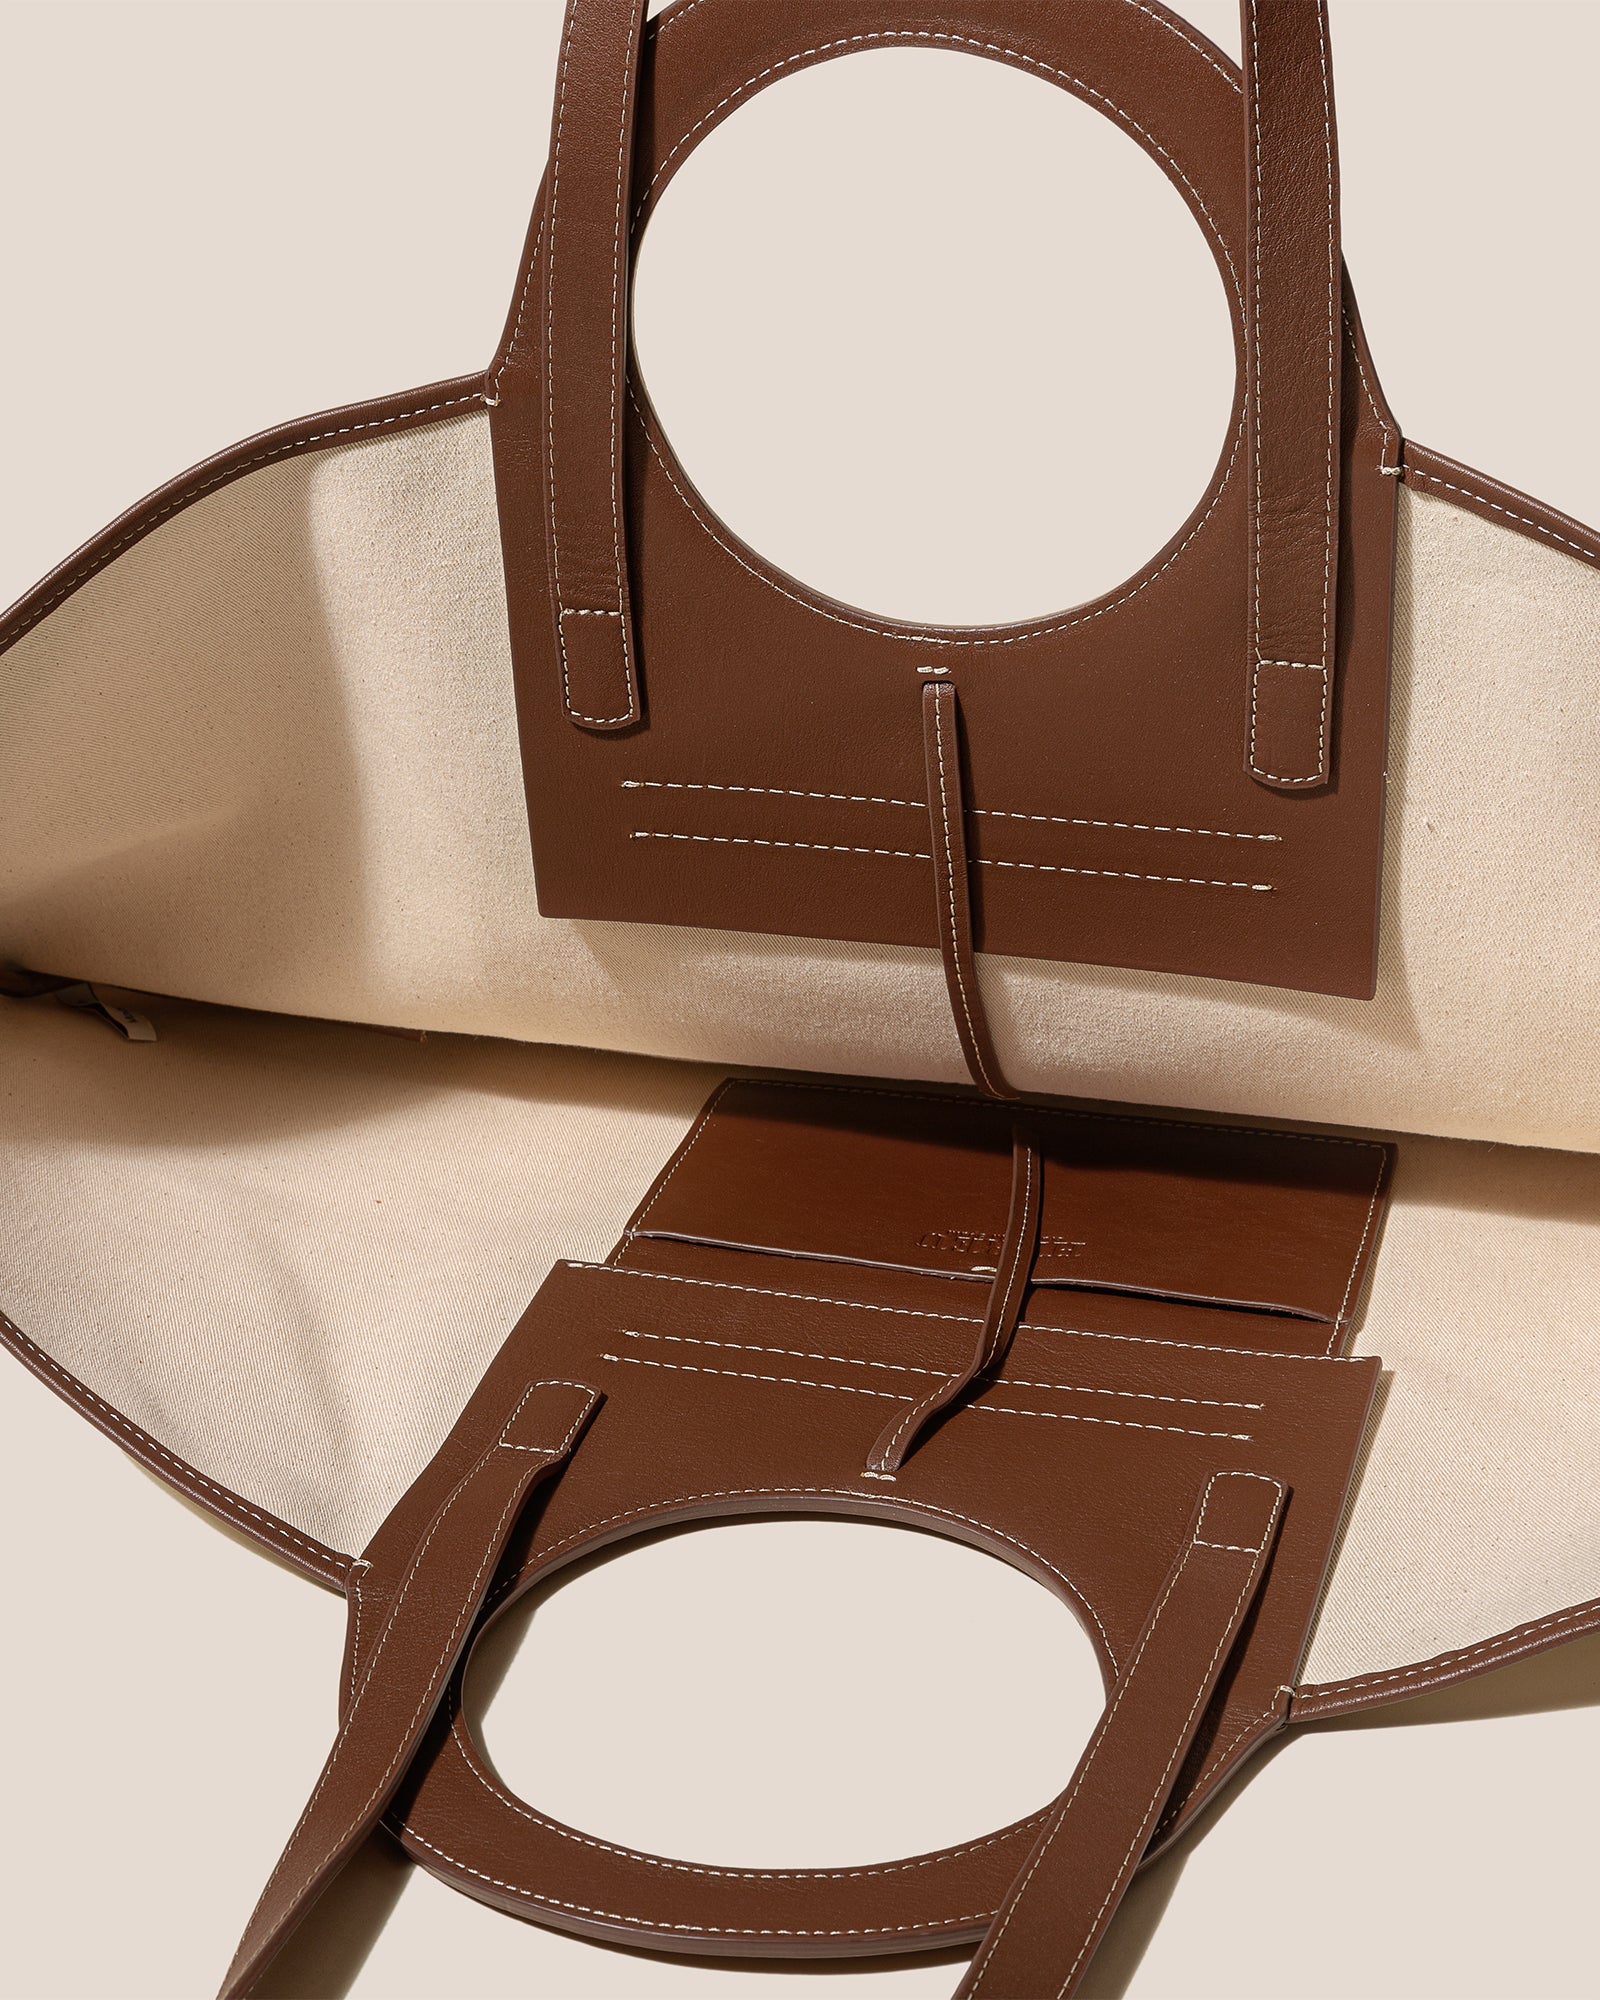 women's leather canvas garden party tote bag Crossbody shoulder bag handbag